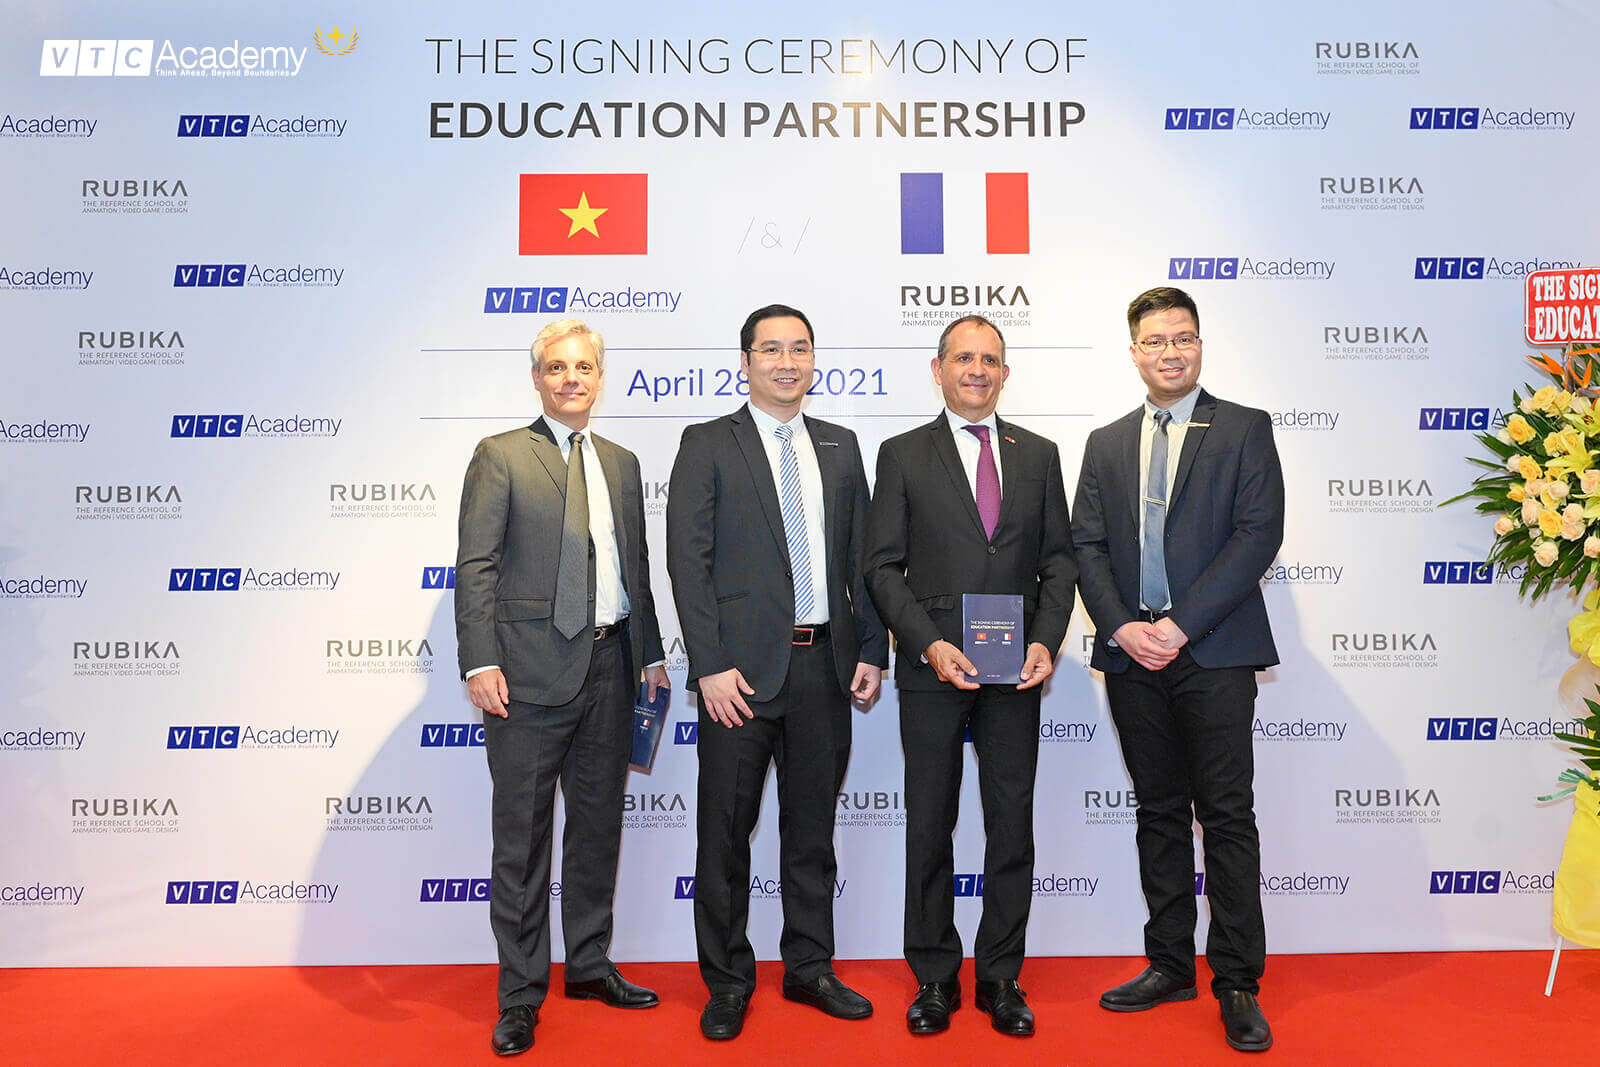 Education Partnership between VTC Academy and RUBIKA – France